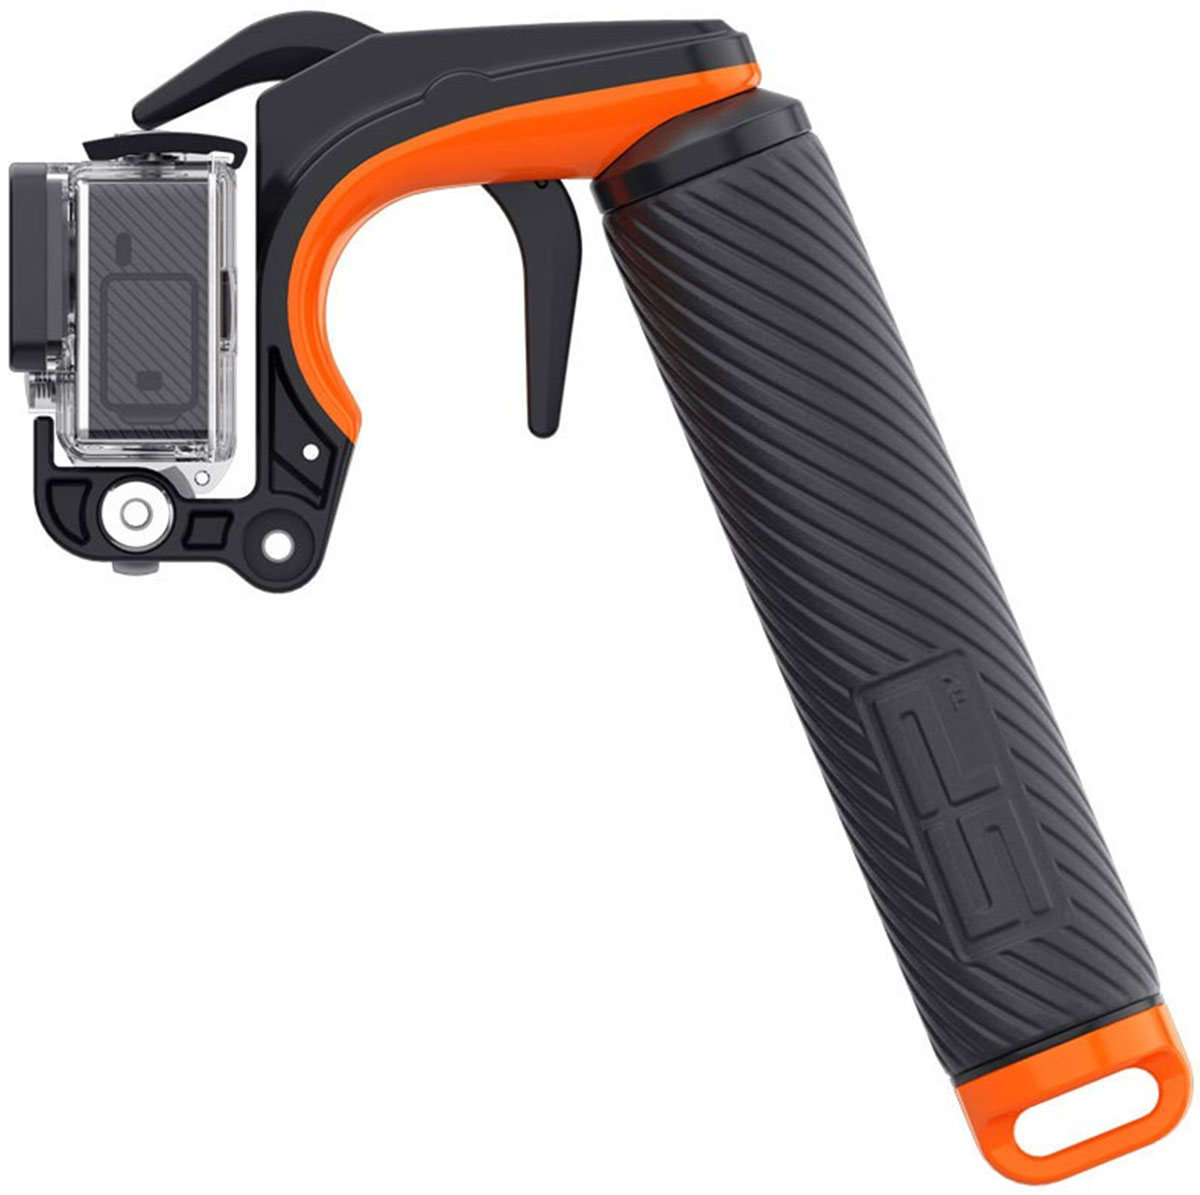 SP-Gadgets Pistol Trigger Grip Set, Black монопод для экшн-камеры